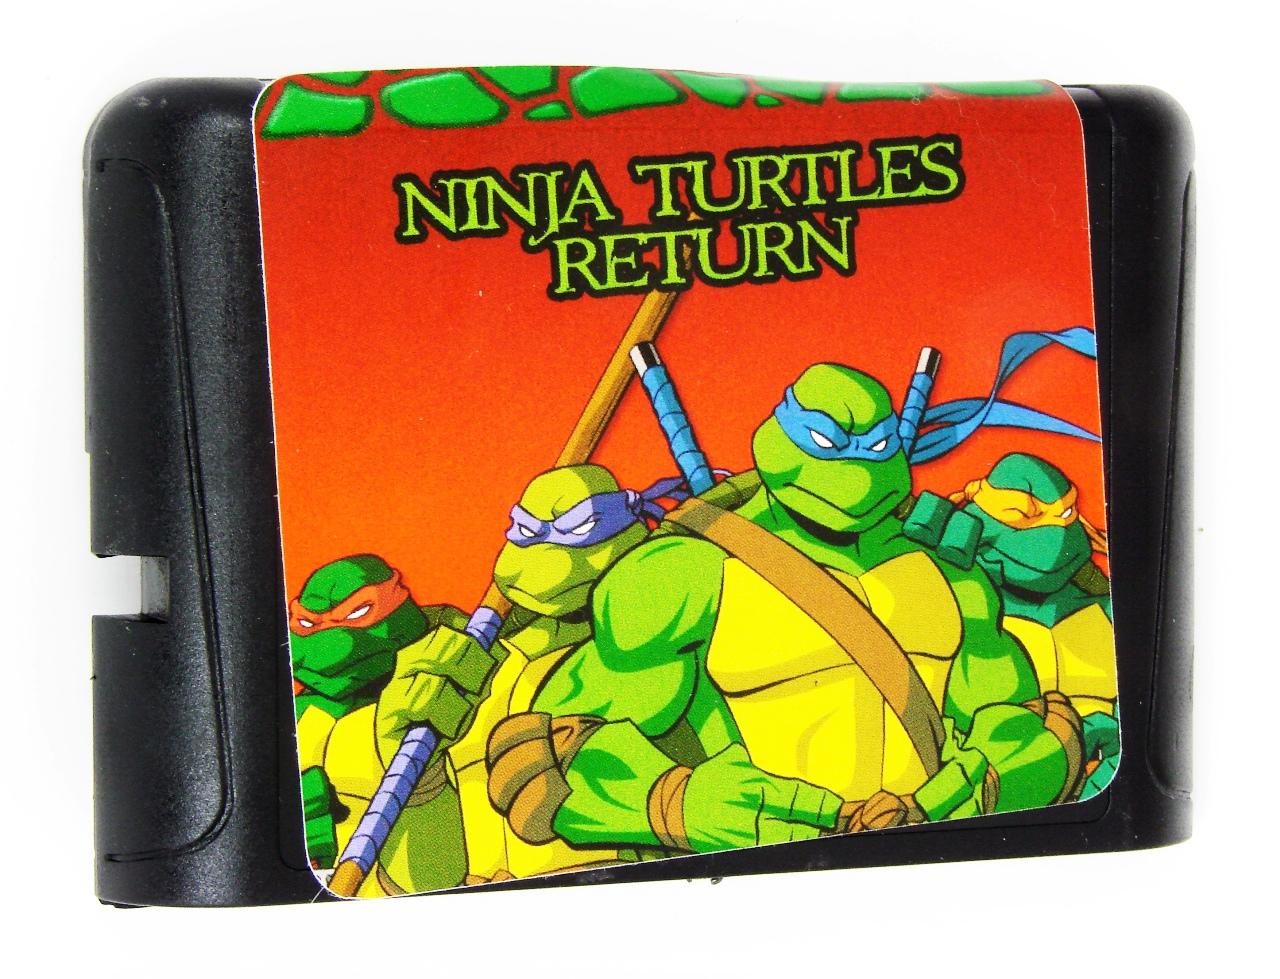 Картридж для Sega Ninja Turtles return (Sega)